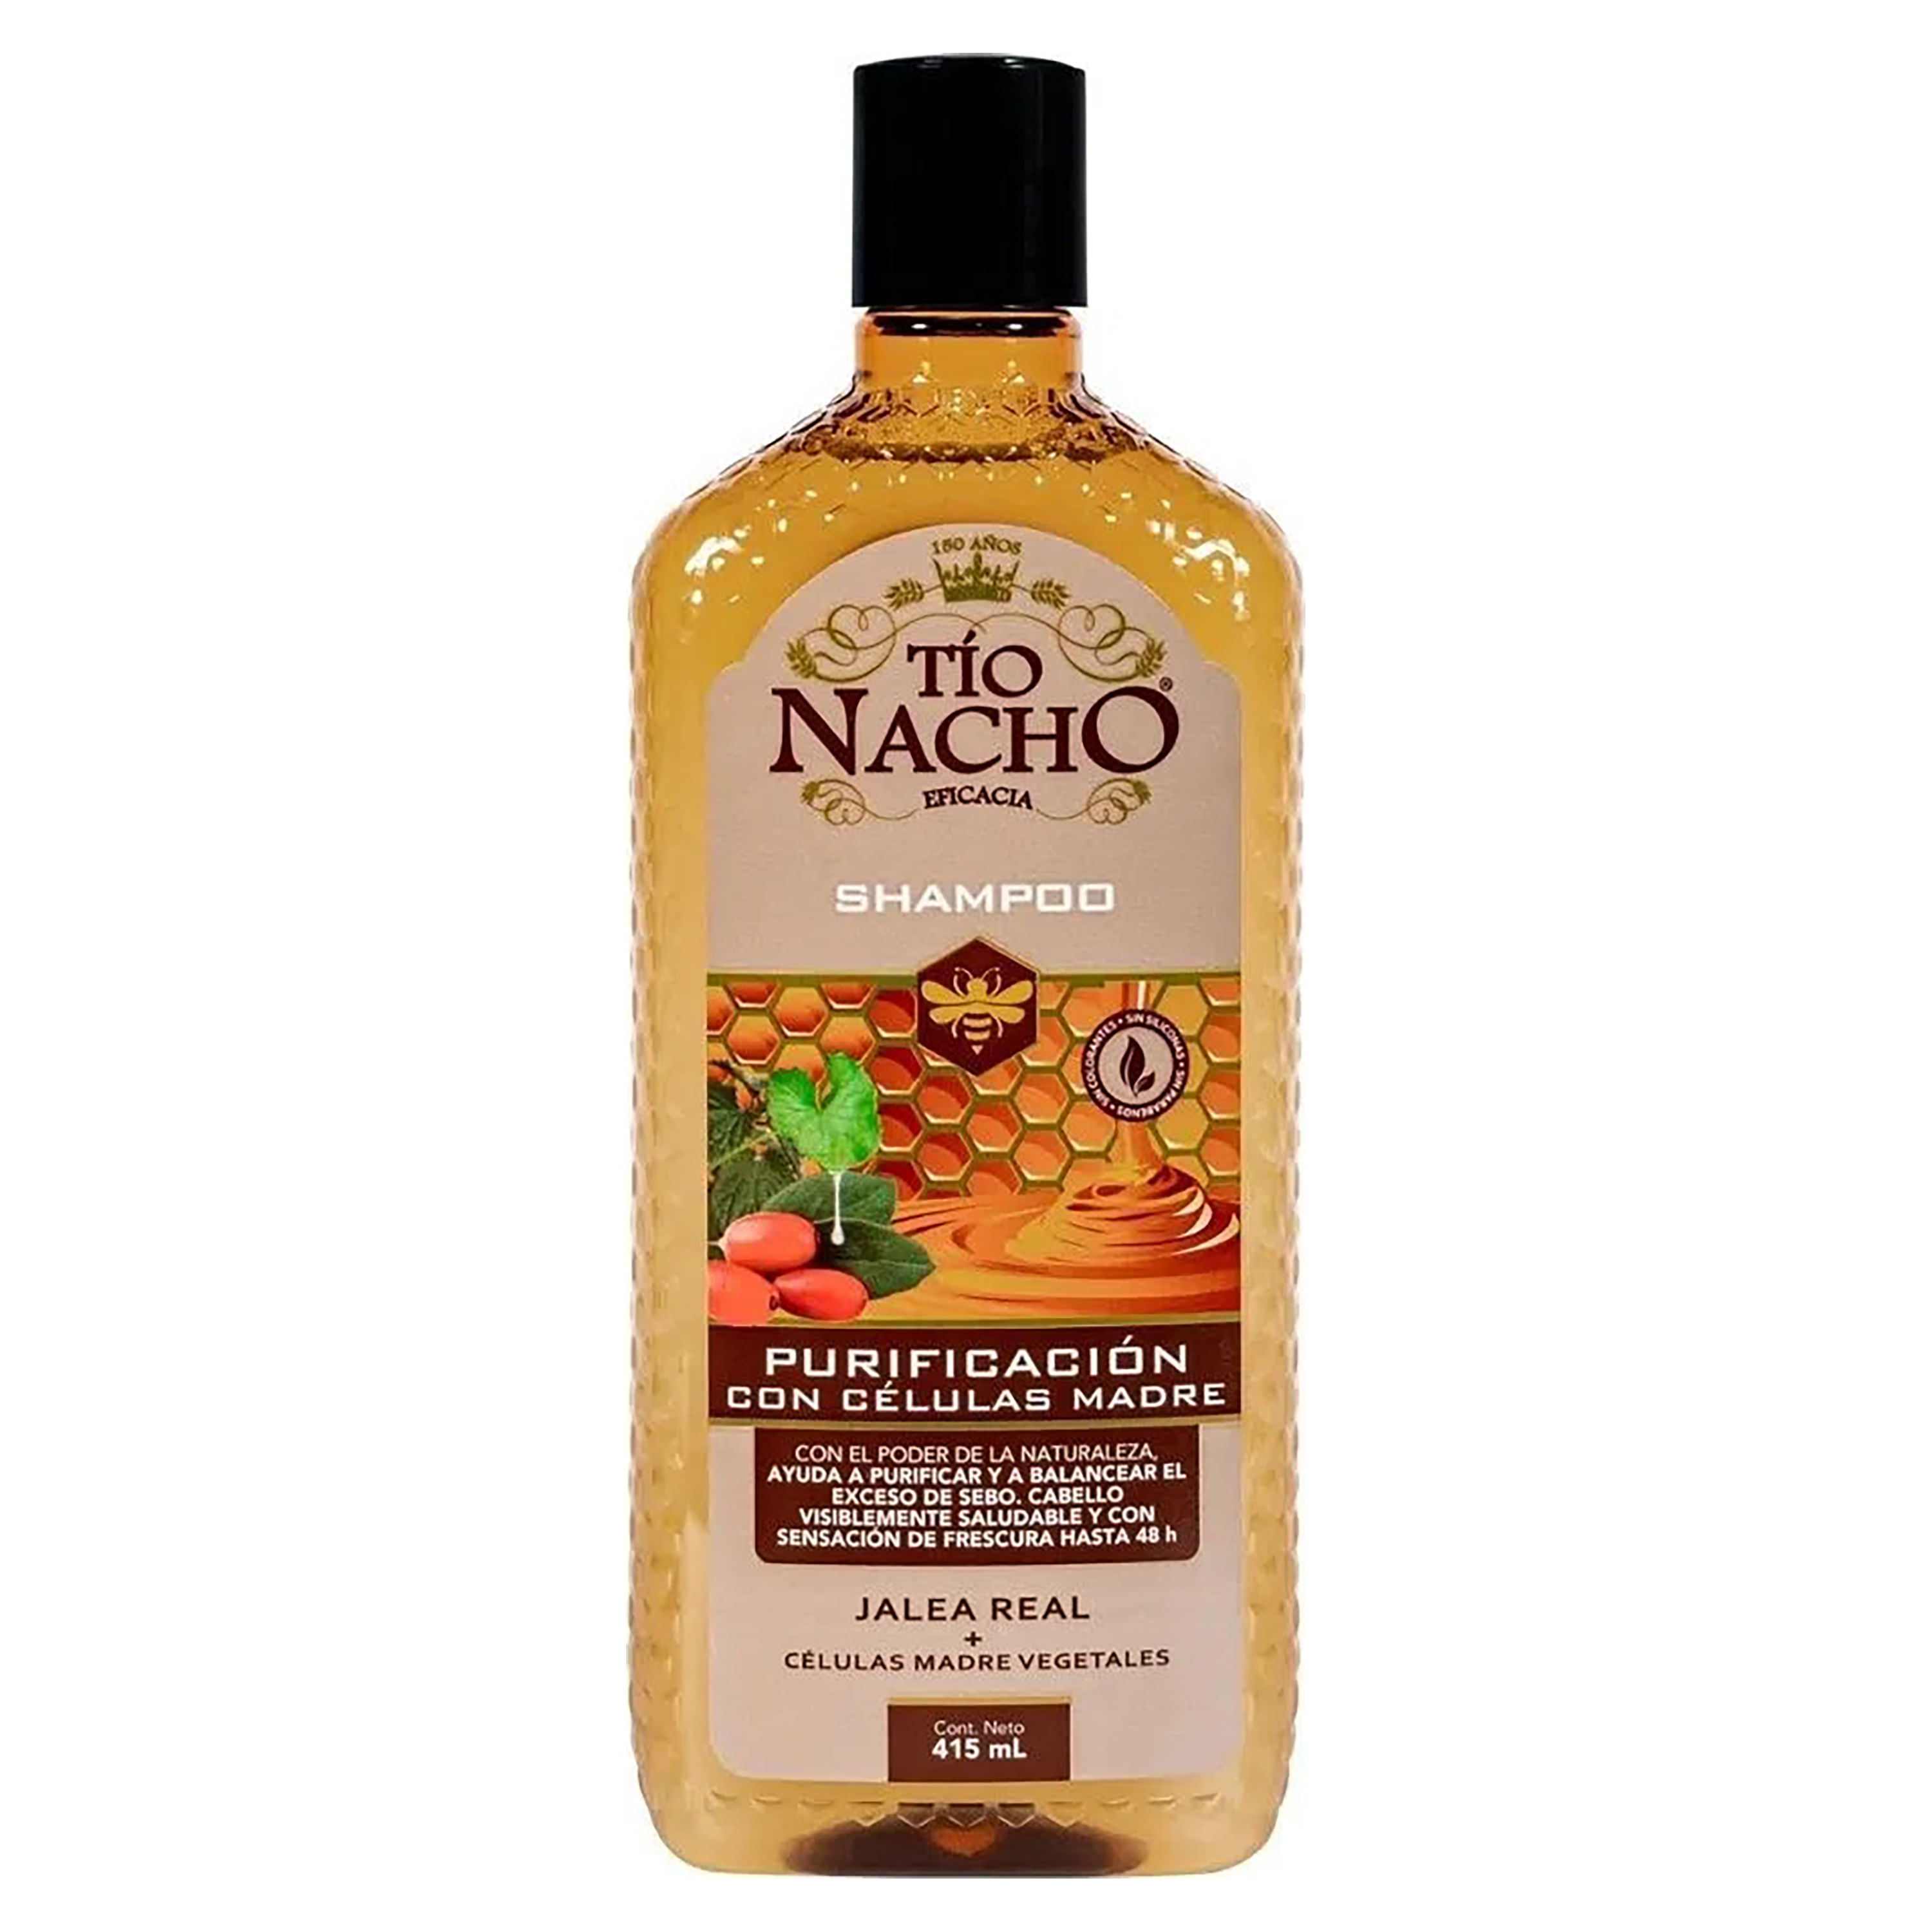 Shampoo-Tio-Nacho-Purificaci-n-415ml-1-75361